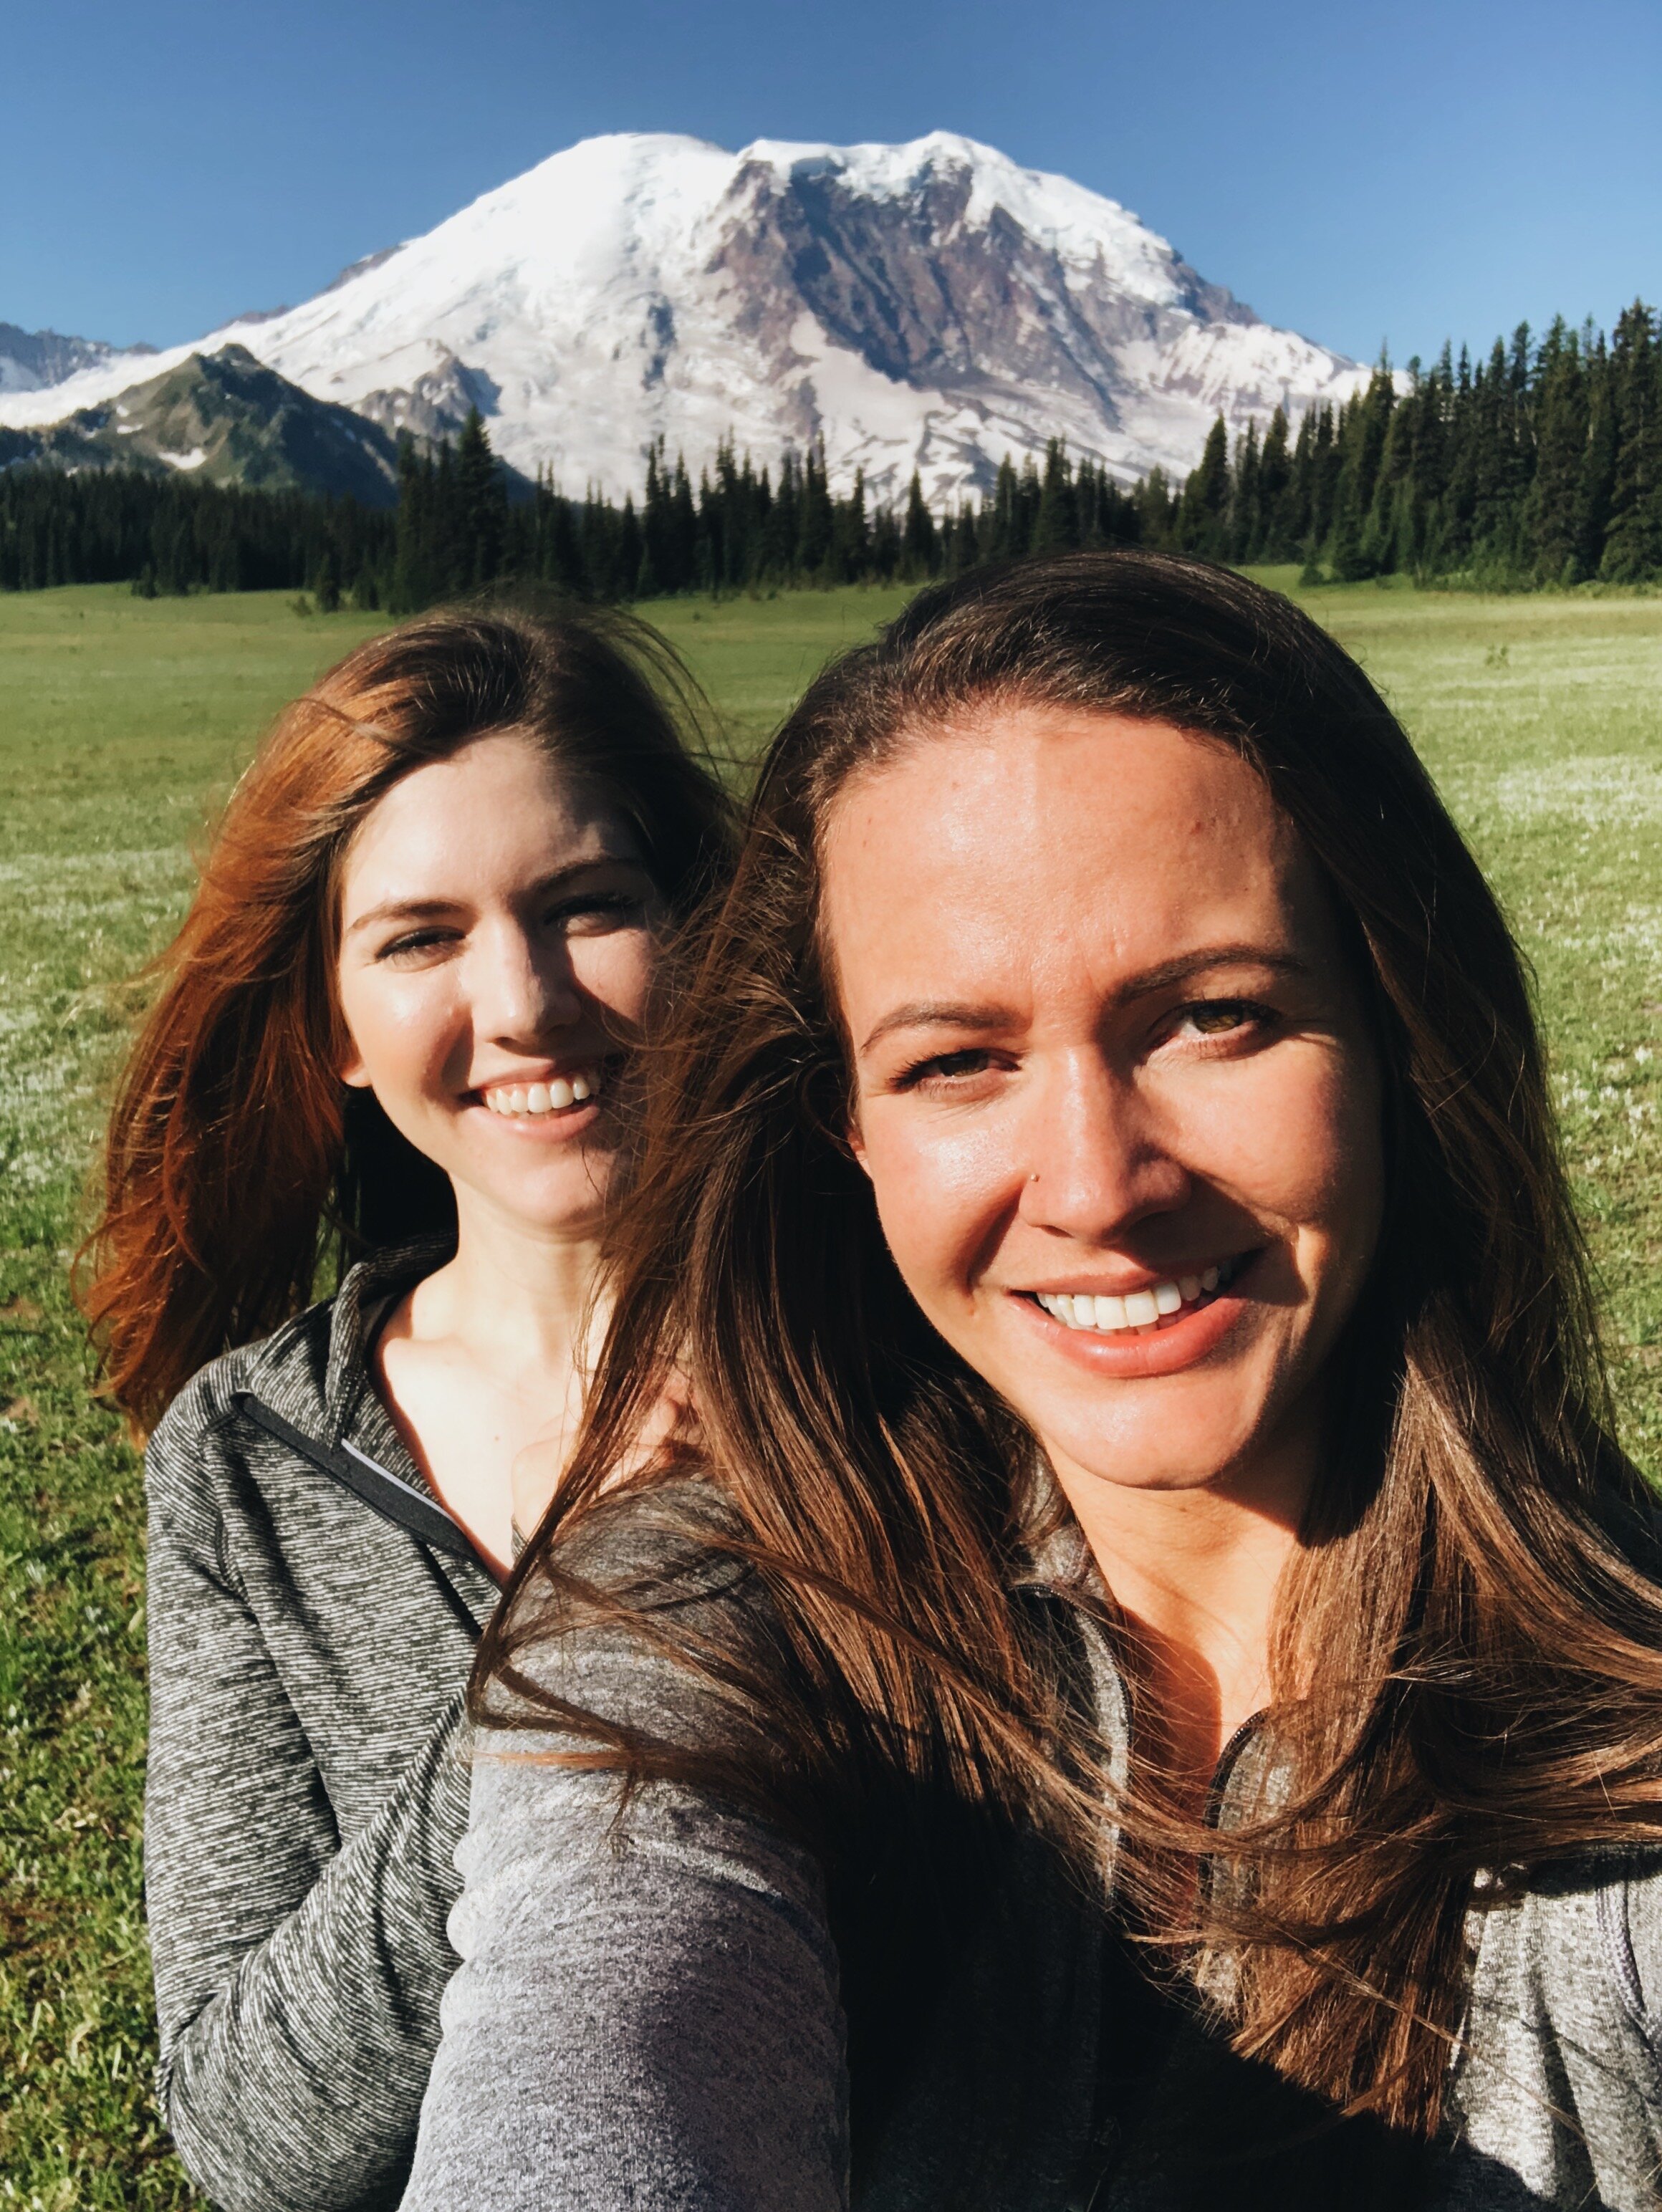  Mount Rainier wedding photographer, Jessi Cavey,&nbsp;hikes with friend near Mount Rainier National Park 